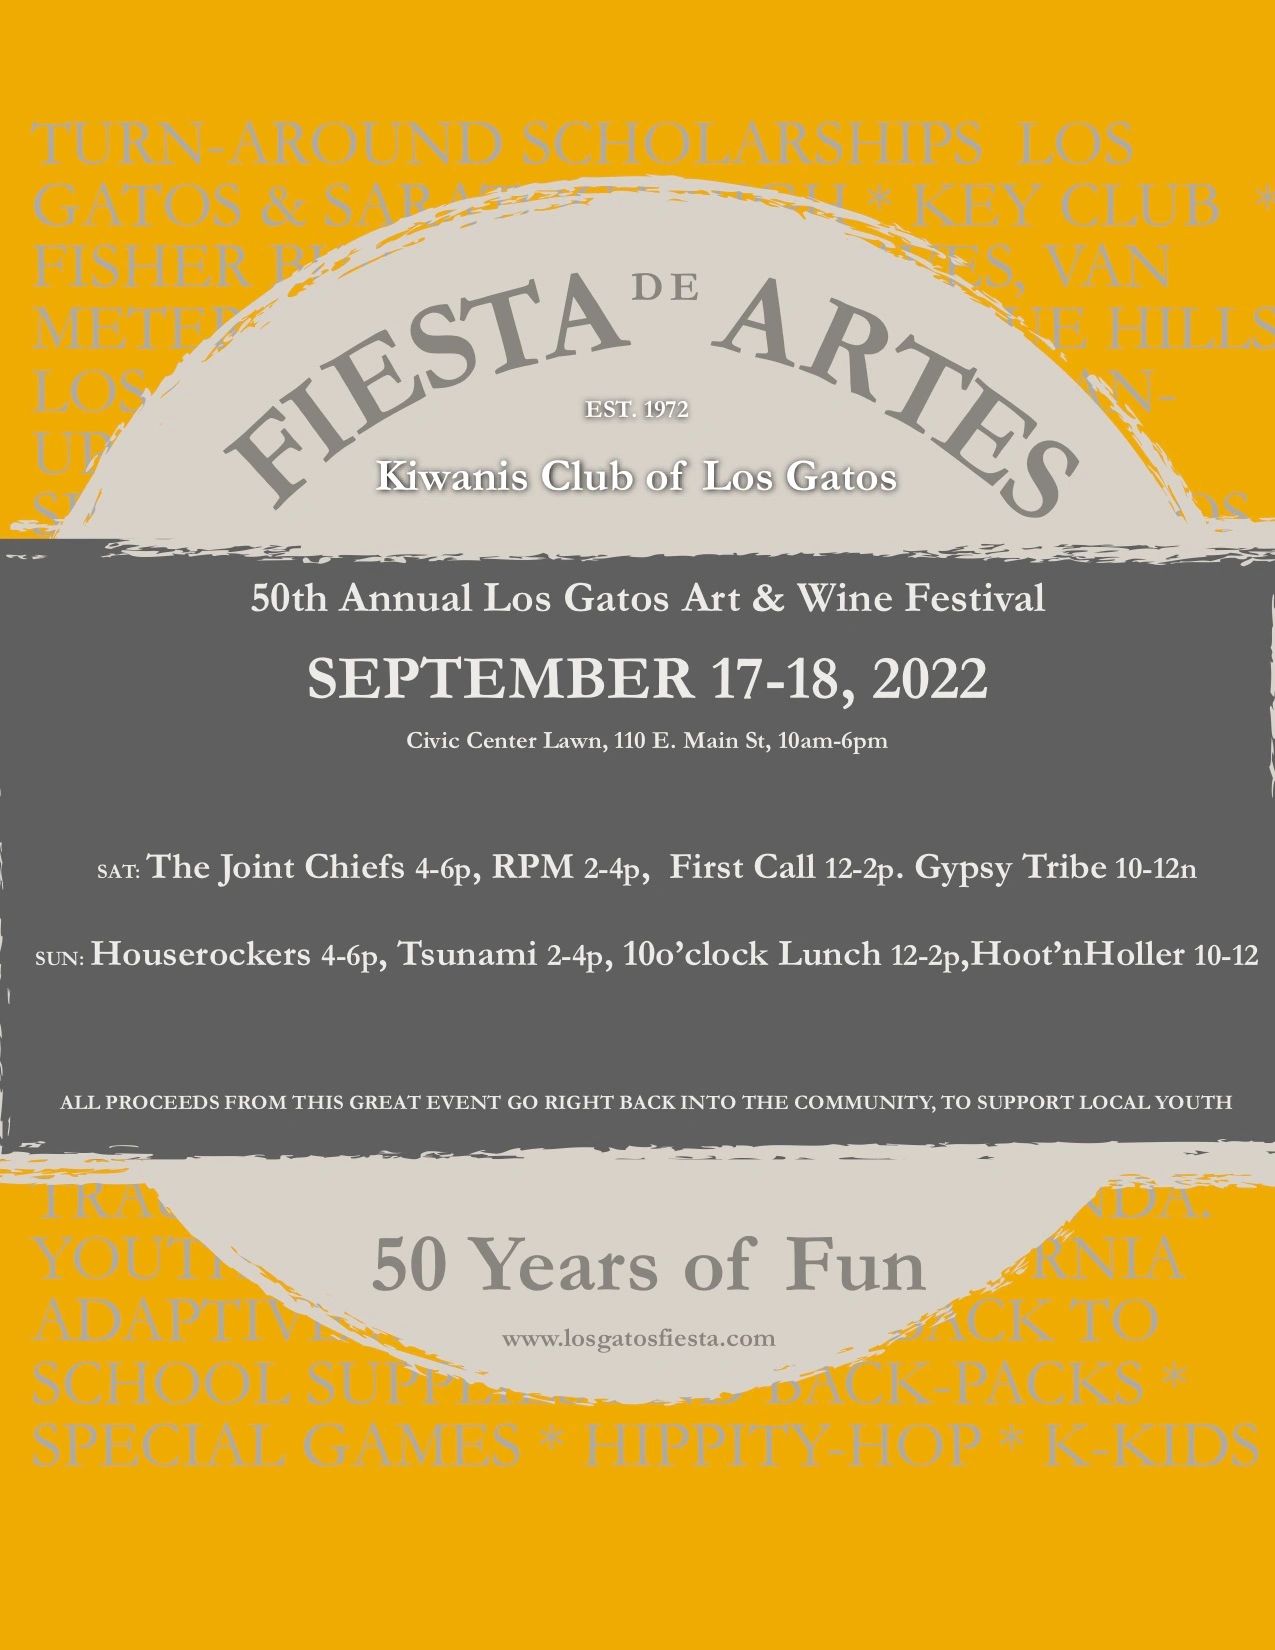 Los Gatos Fiesta de Artes Art & Wine Festival, Live Music